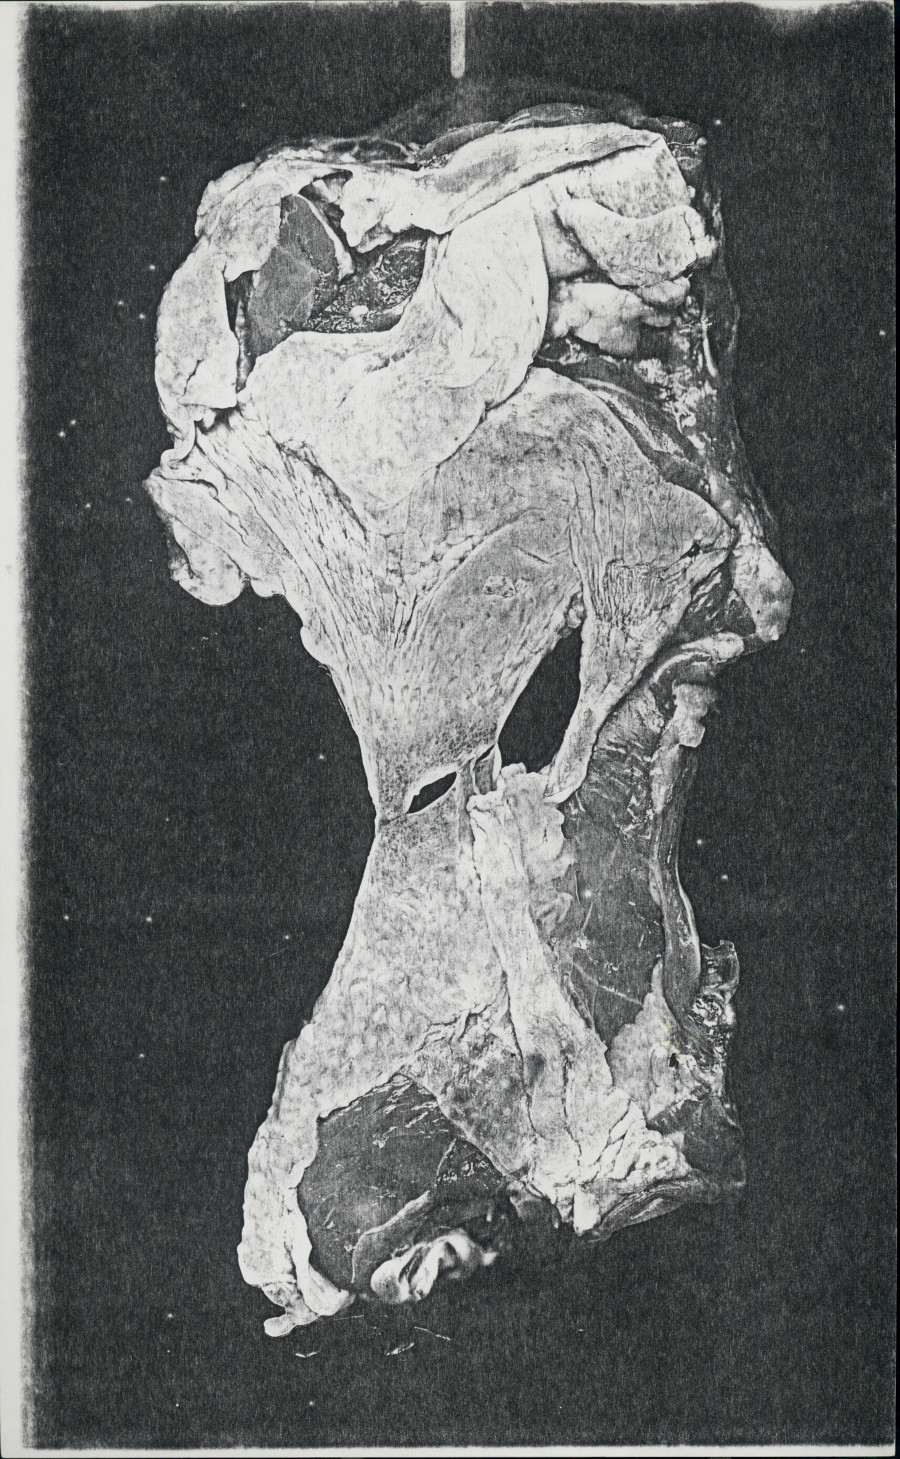 Pati Hill, Untitled (meat), c. 1977–79, Xerograph, 35.5 × 21 cm